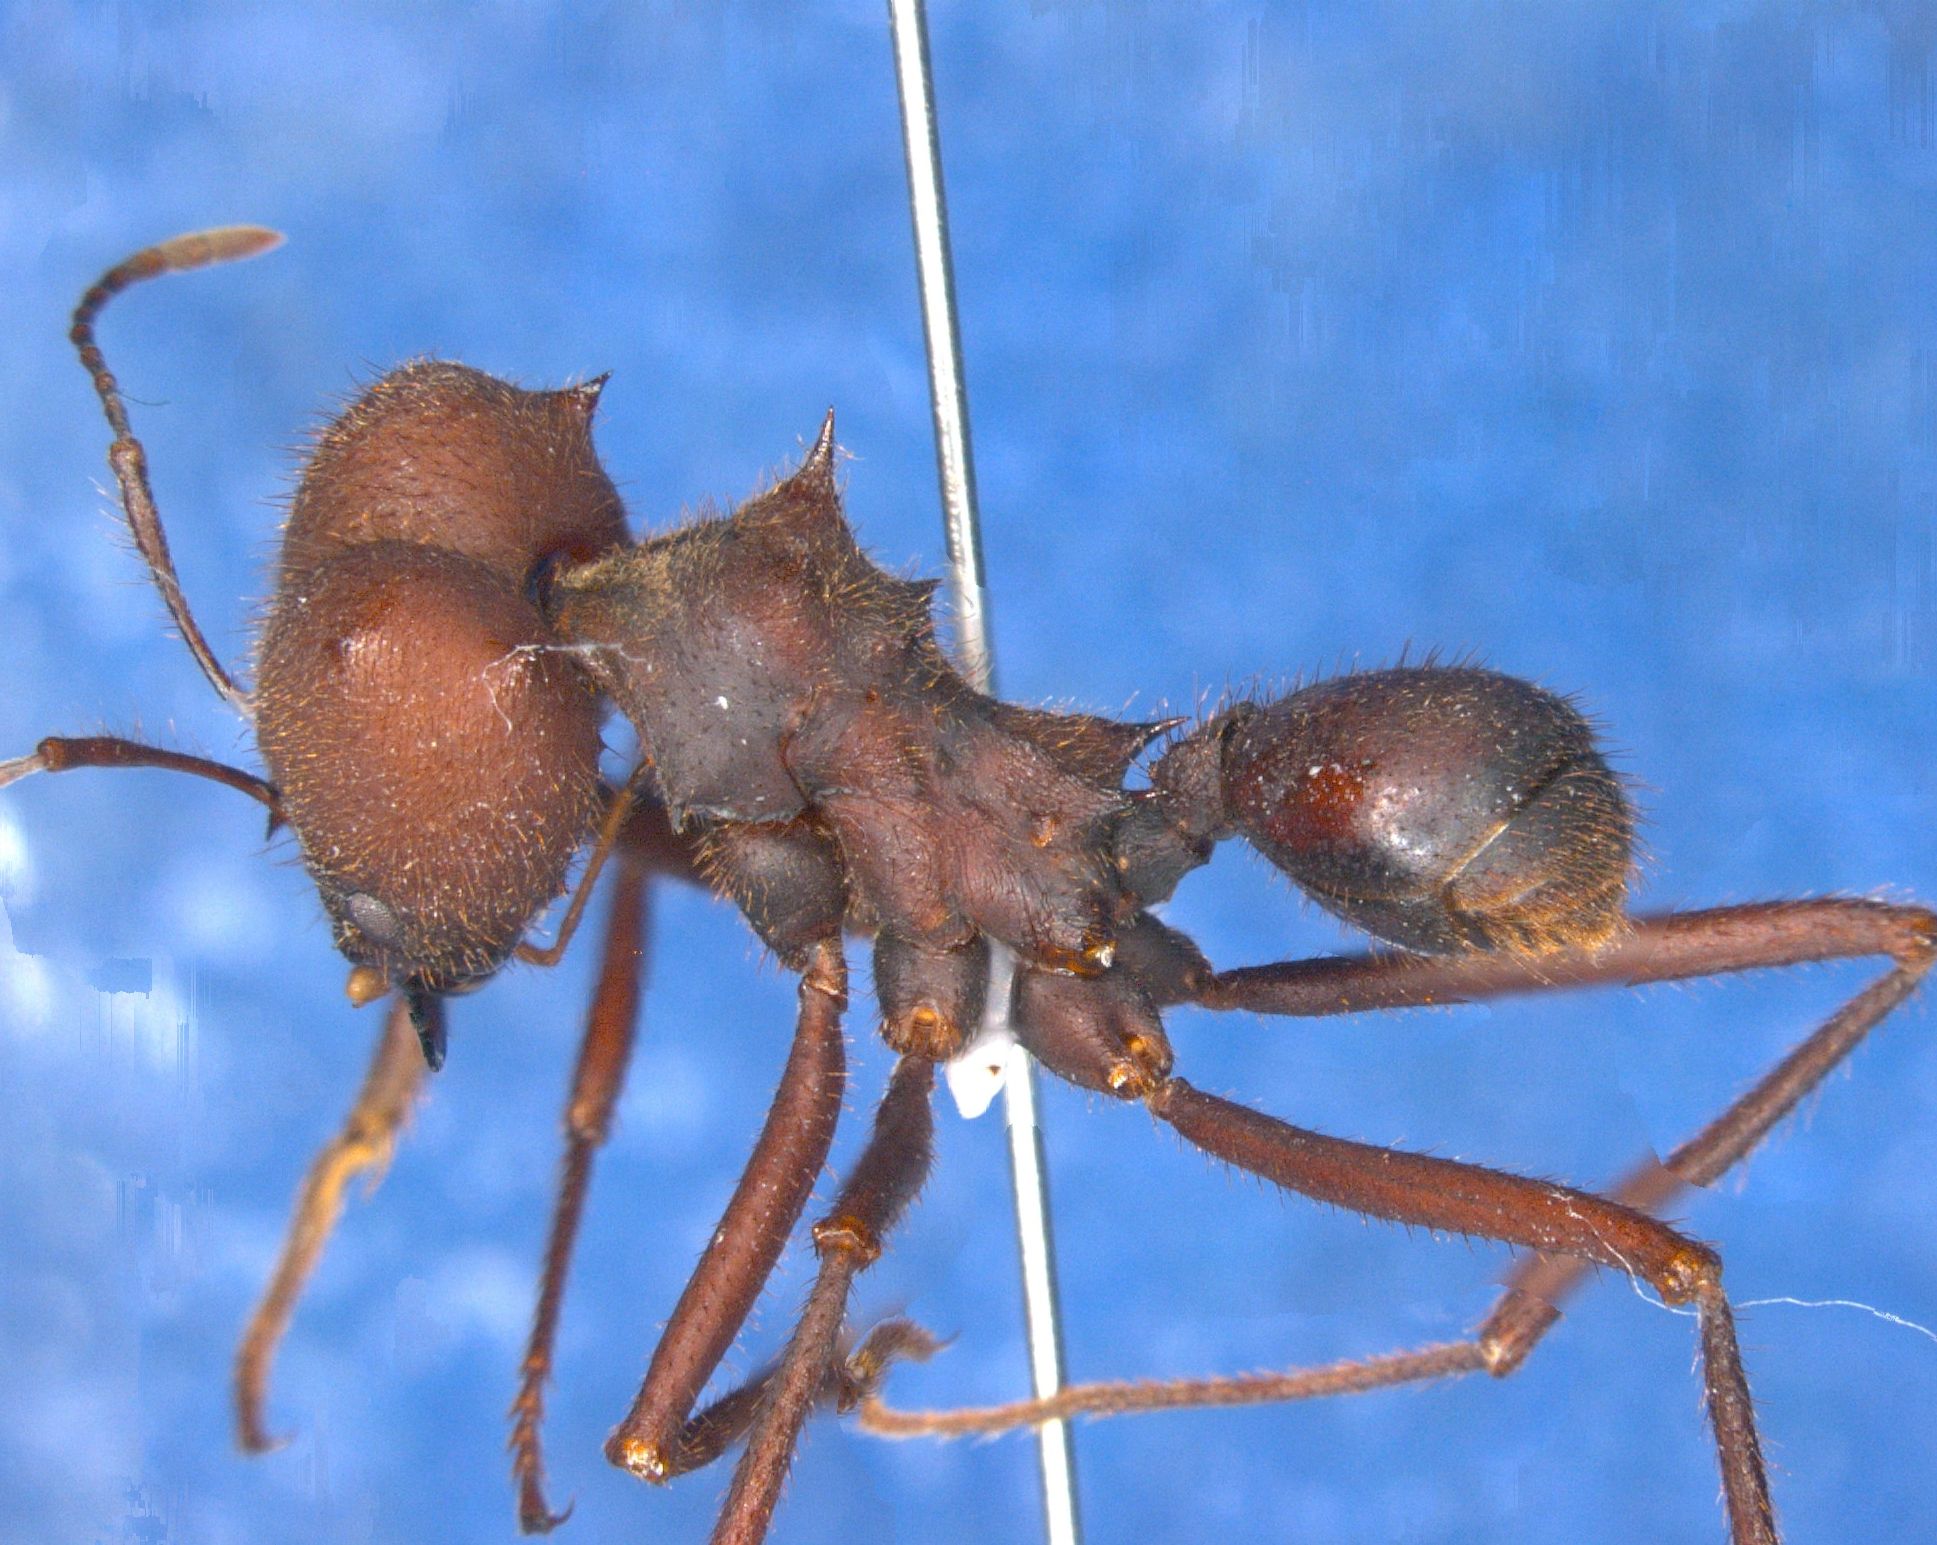 Atta sexdens - Lateral The Virtual Museum of Attini Ants